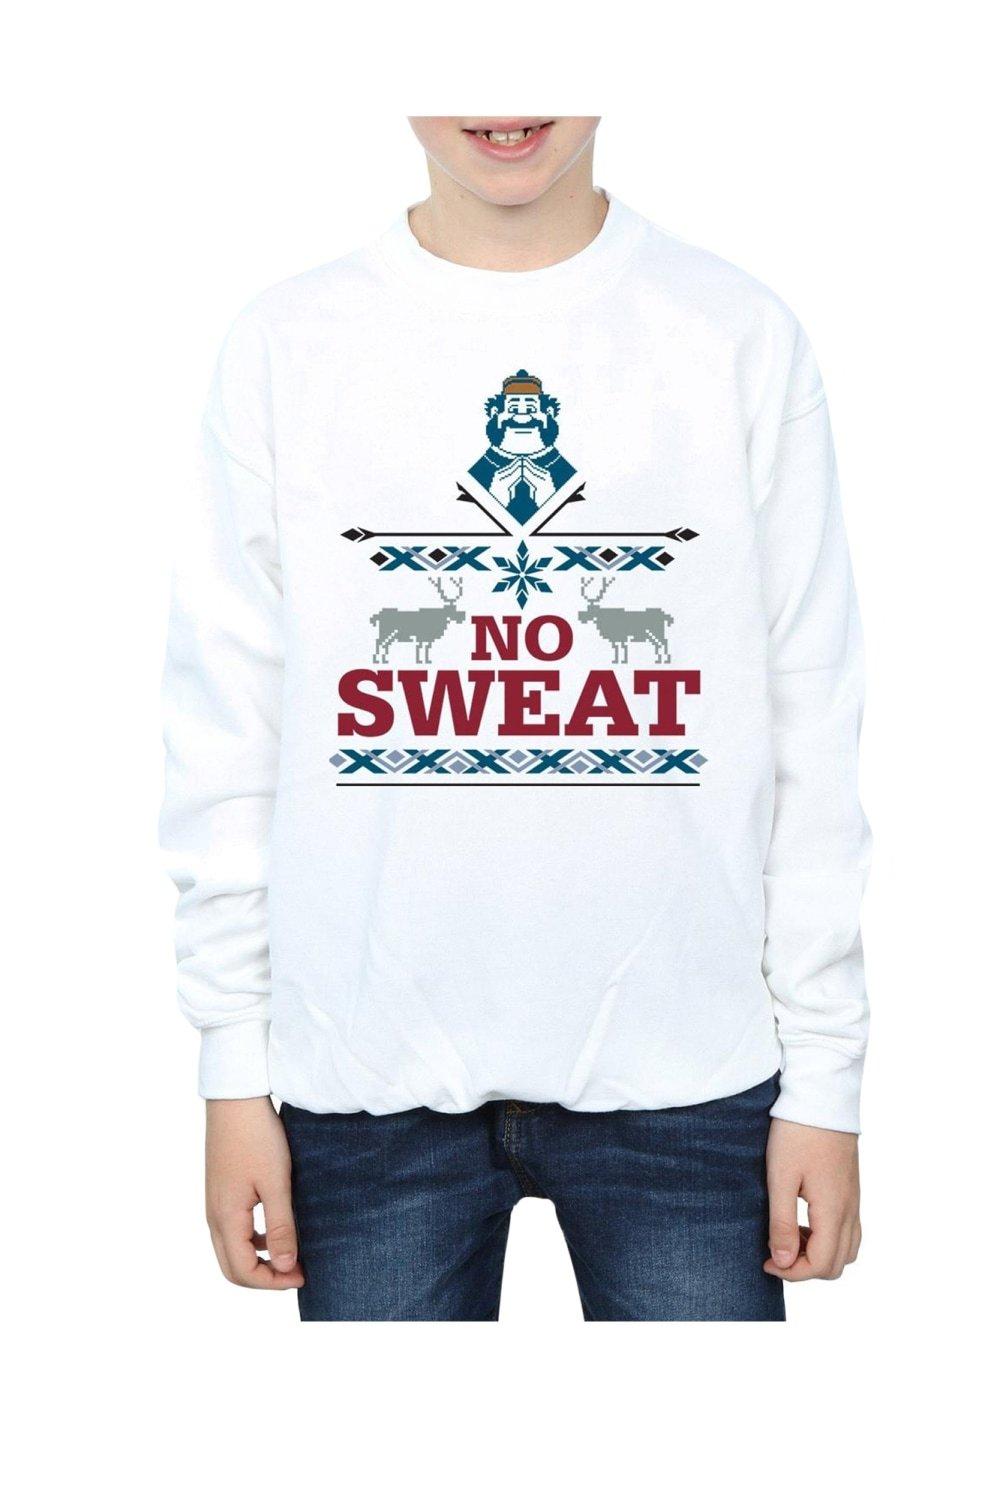 Frozen Oaken No Sweat Sweatshirt